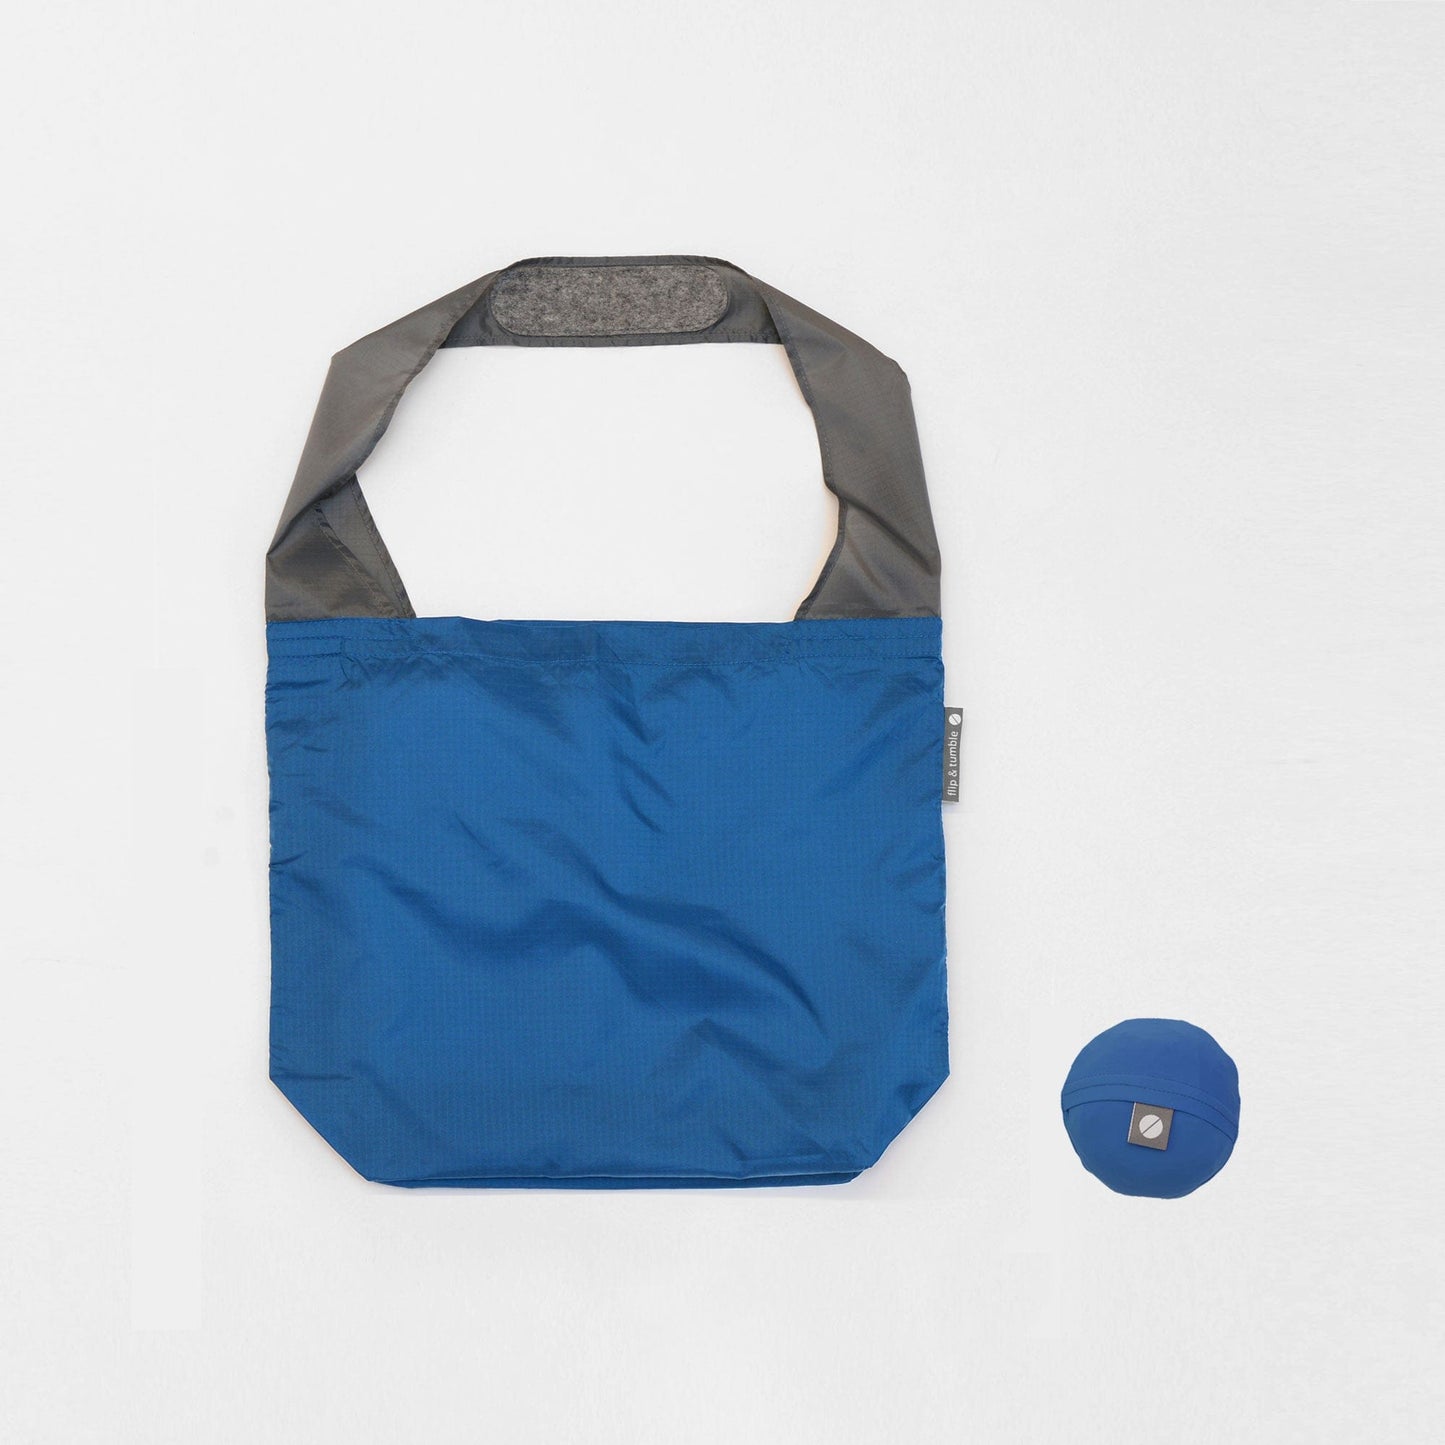 24-7 bag - flip & tumble - blue packable shopping bag, stylish reusable bag